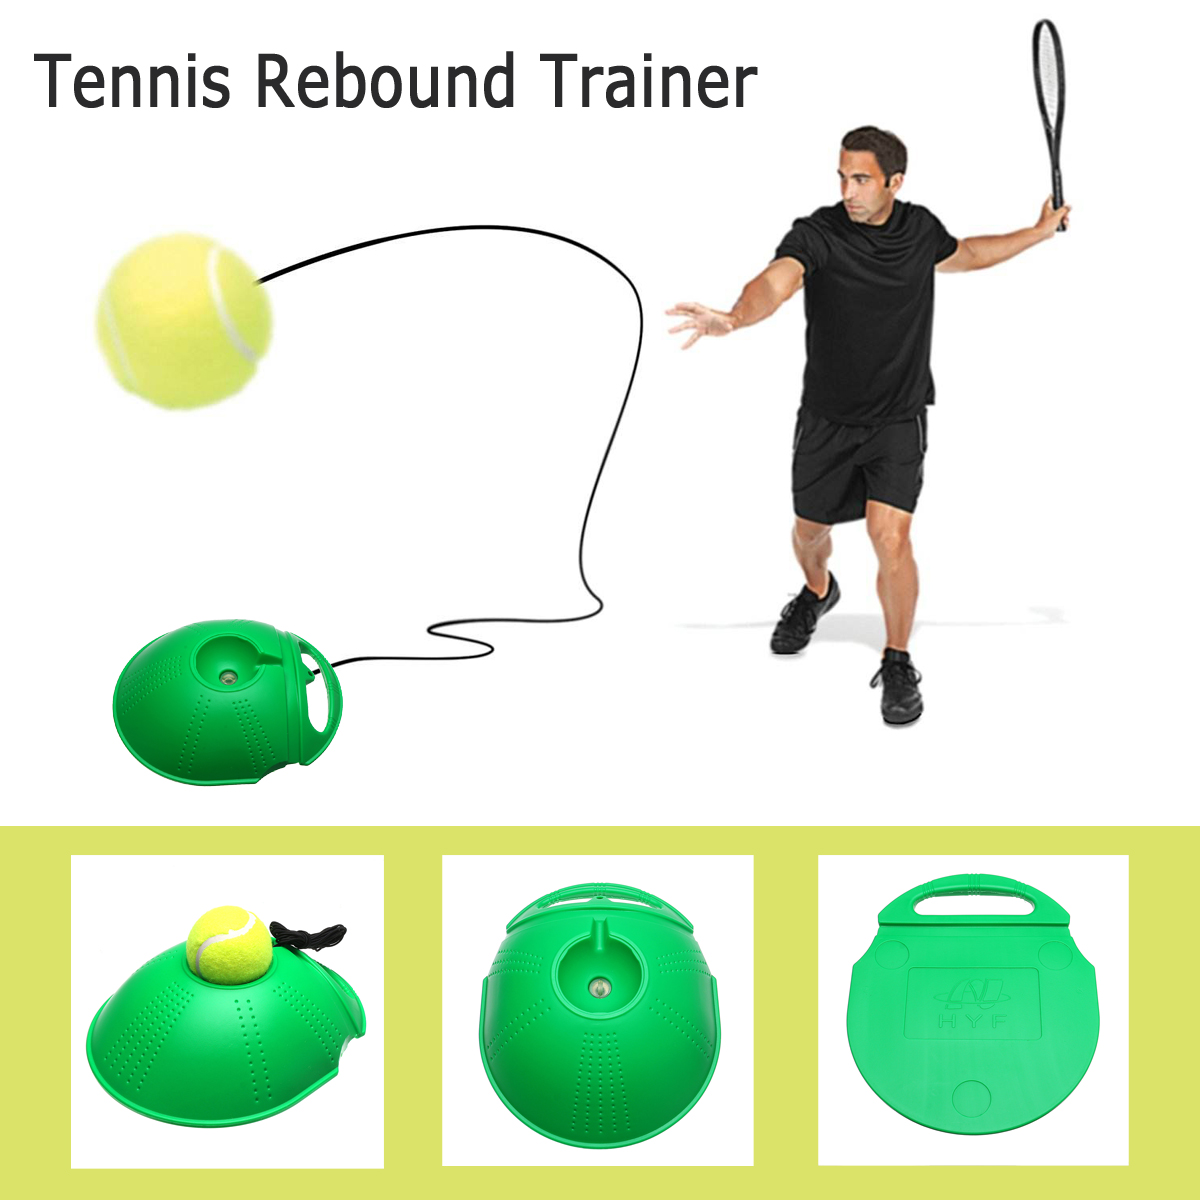 Tennis-Training-Tool-Rebound-Trainer-Self-study-Exercise-Ball-Baseboard-Holder-1305524-2